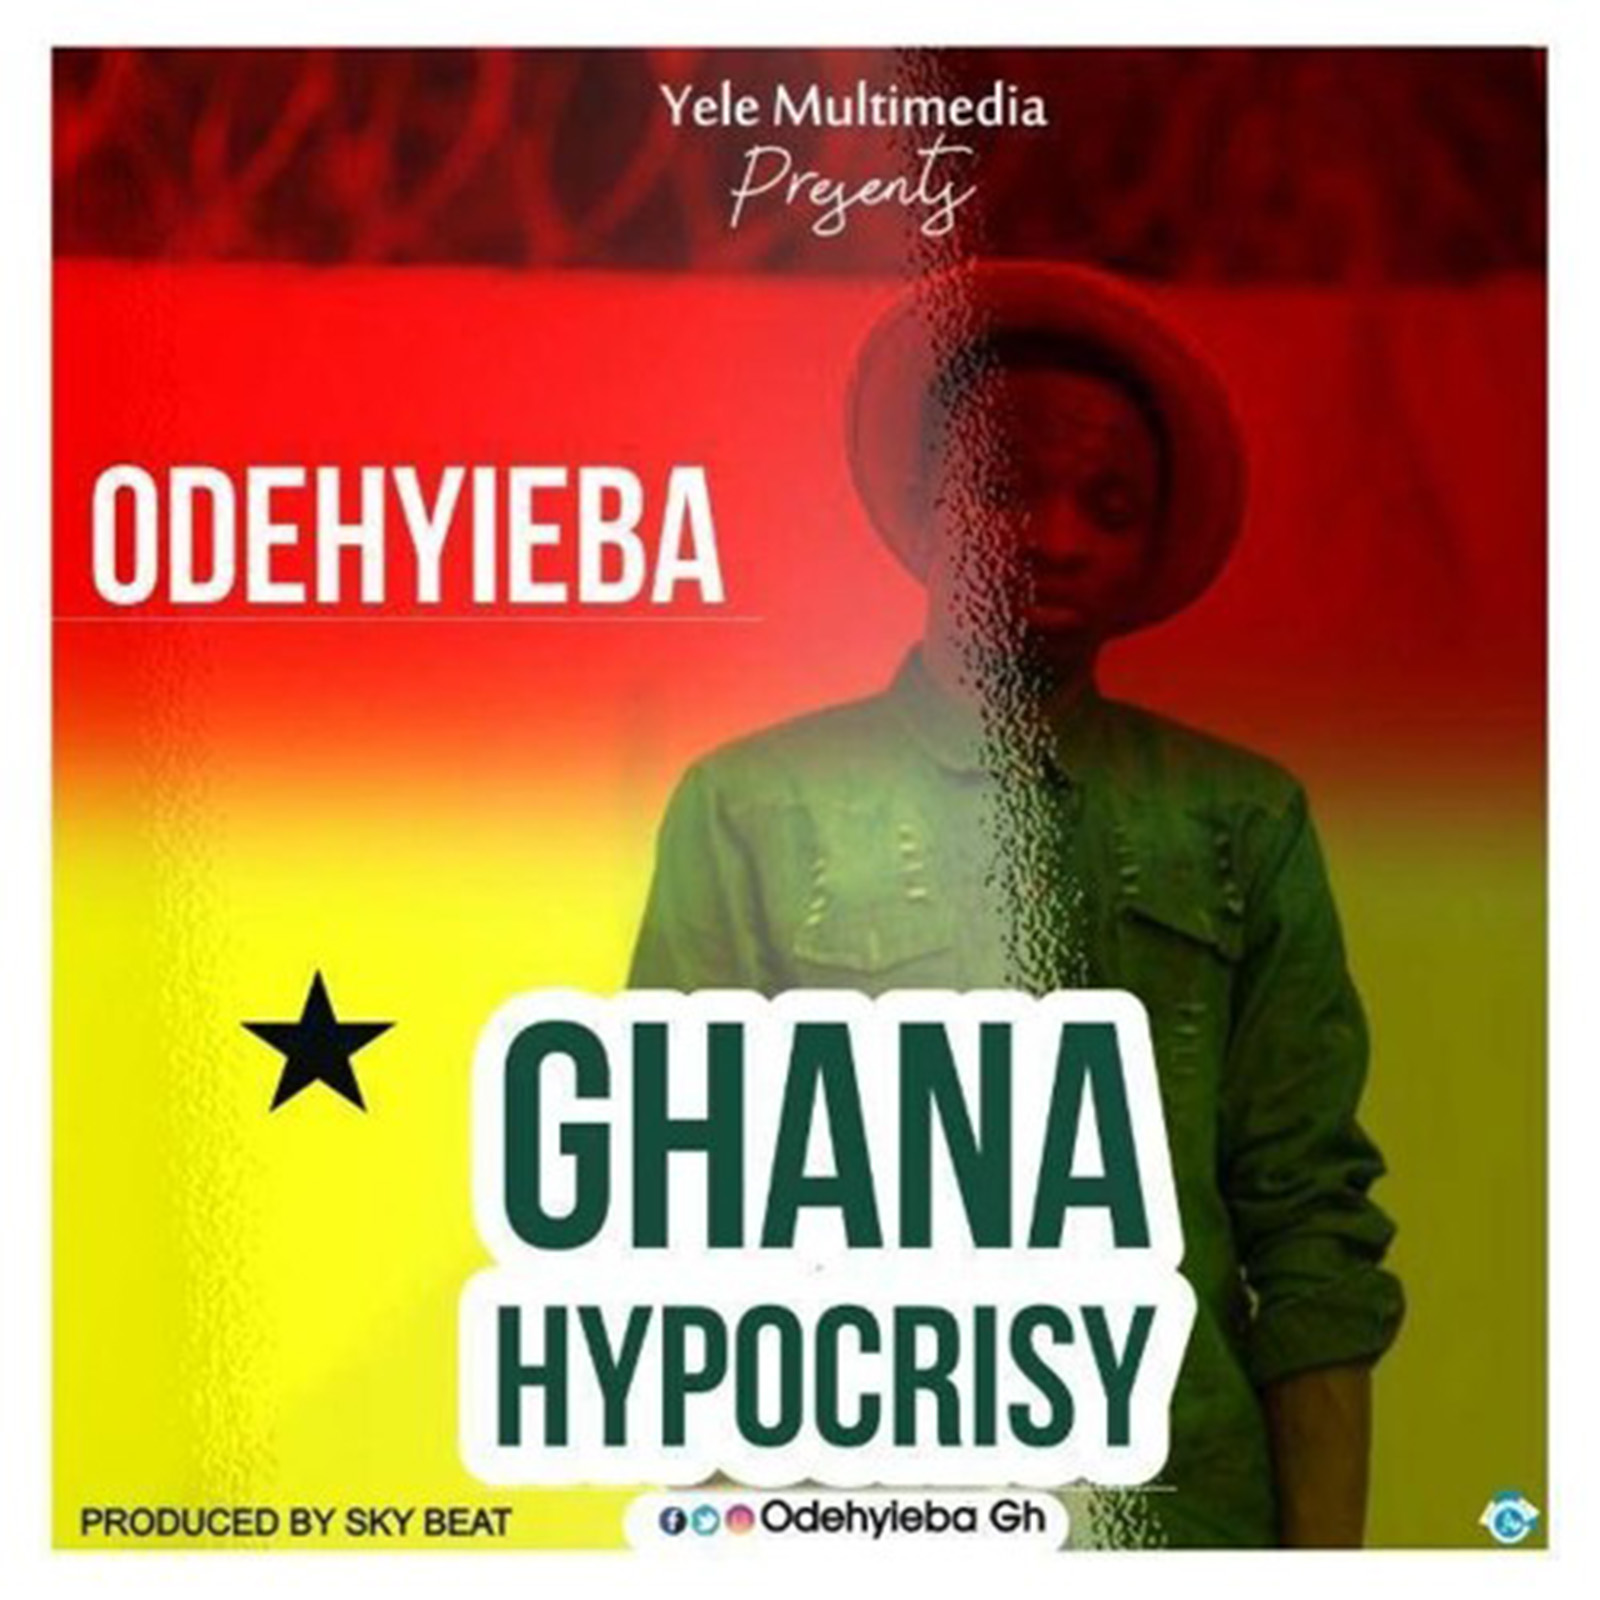 Ghana Hypocrisy by Odehyieba